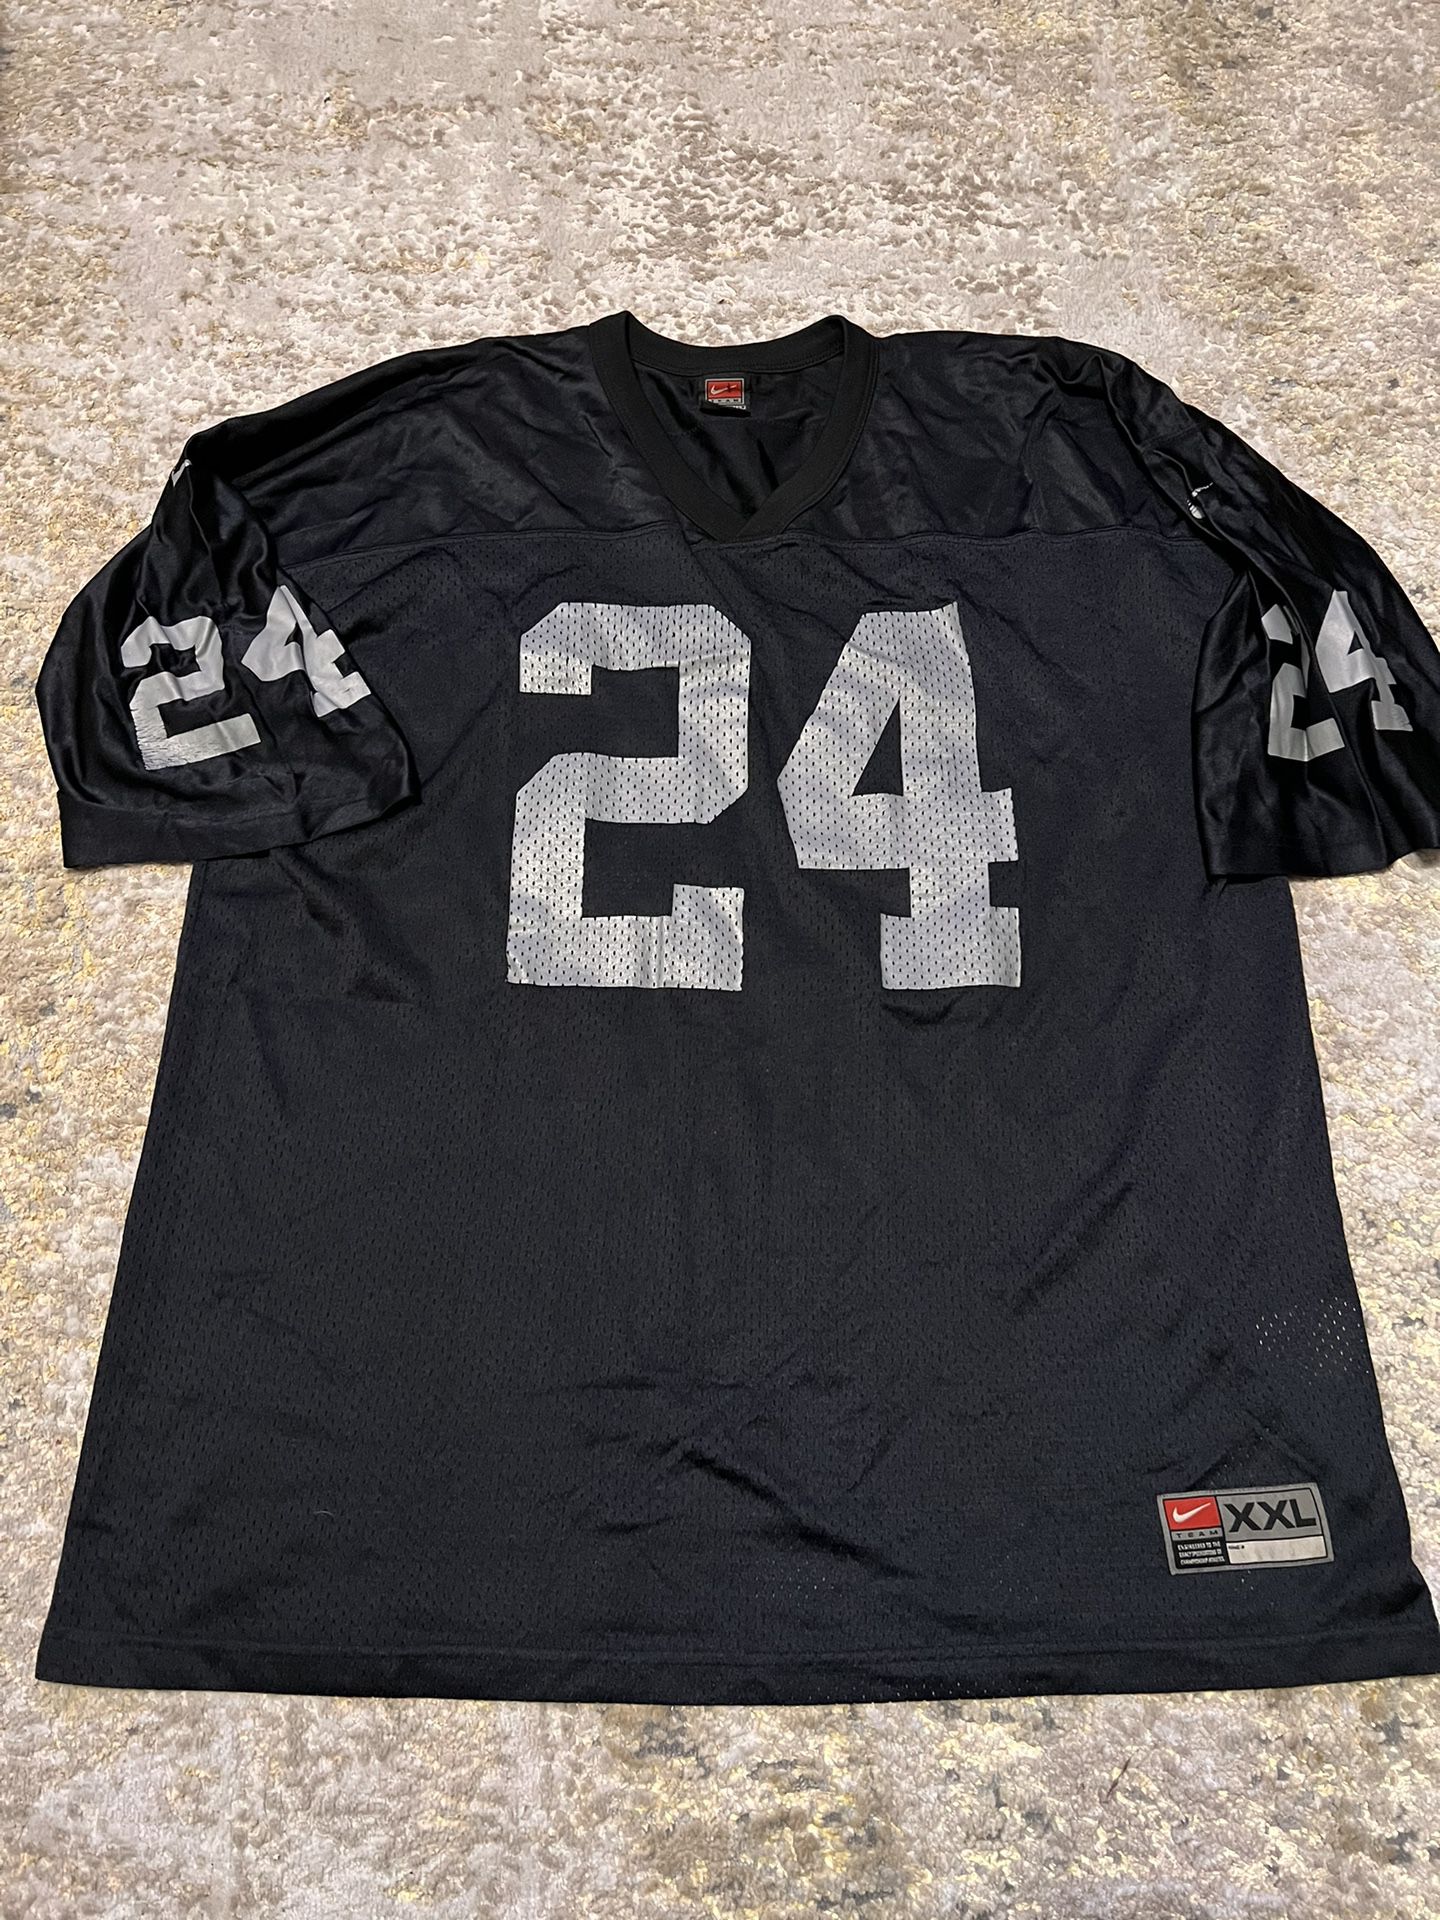 Rare Vintage Nike Woodson Oakland Raiders Jersey Size XXL, Not Lynch, Jackson, Adams, Carr, 